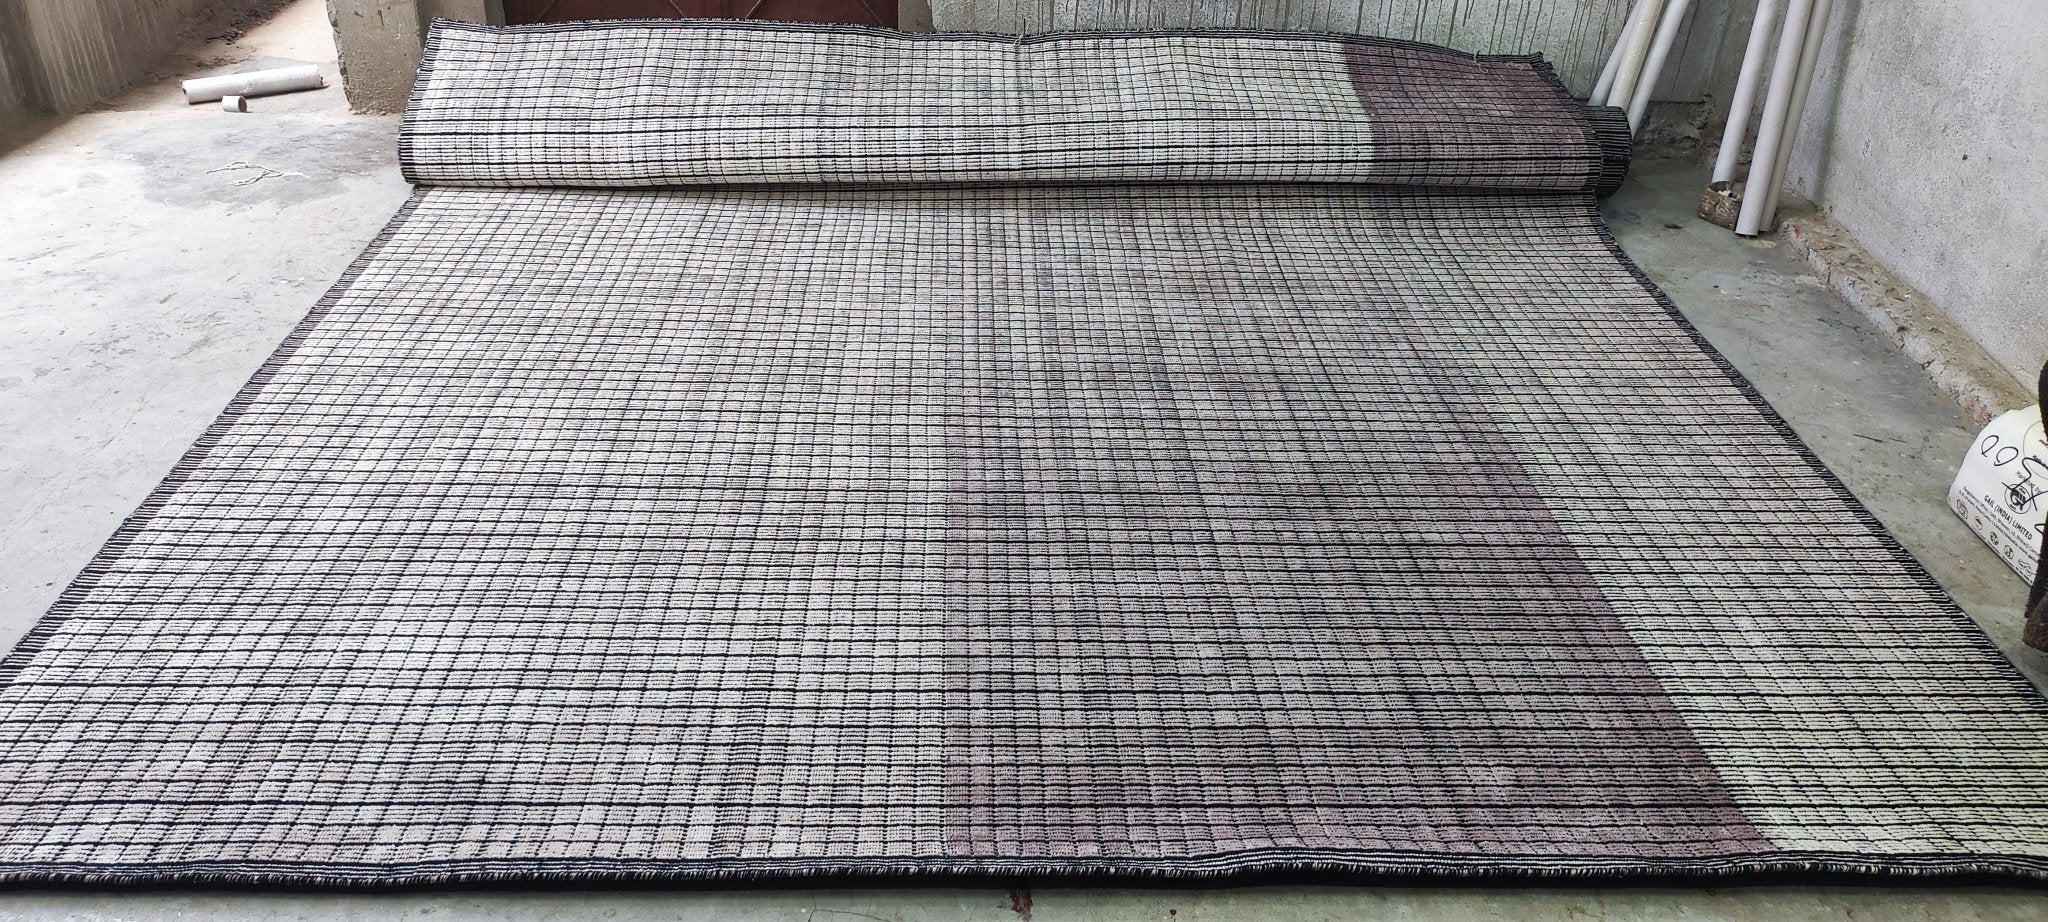 Karl 9.6x13.9 Handwoven Blended Textured Carpet | Banana Manor Rug Factory Outlet